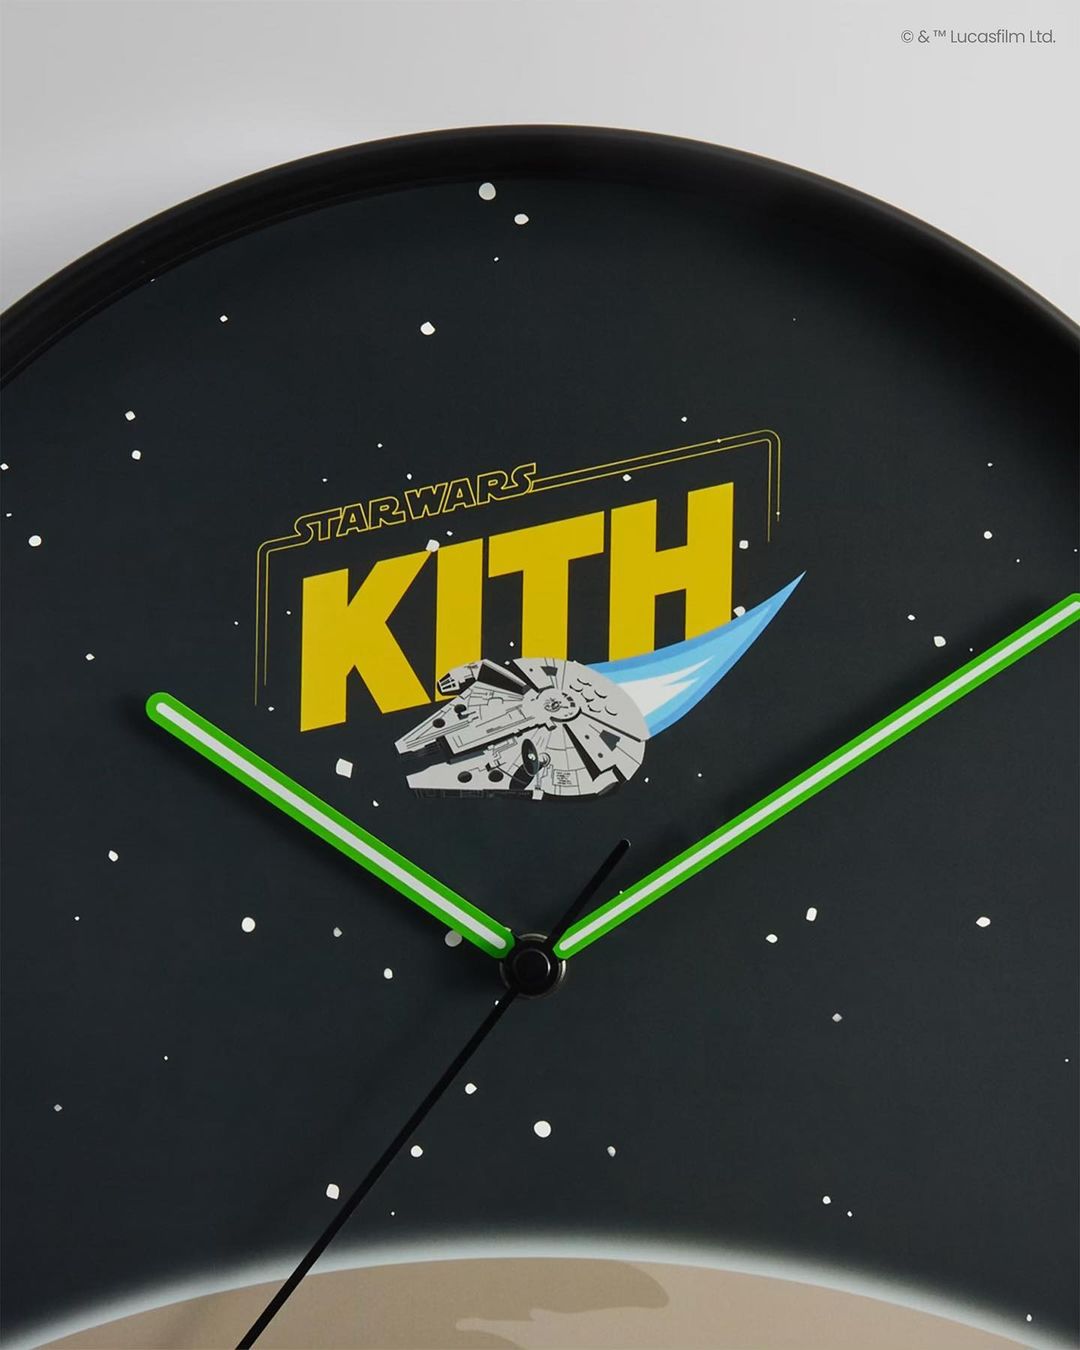 【STAR WARS x Kith RETURN OF THE JEDI Anniversary Collection】KITH MONDAY PROGRAM 2023年 5/1 発売 (キス)